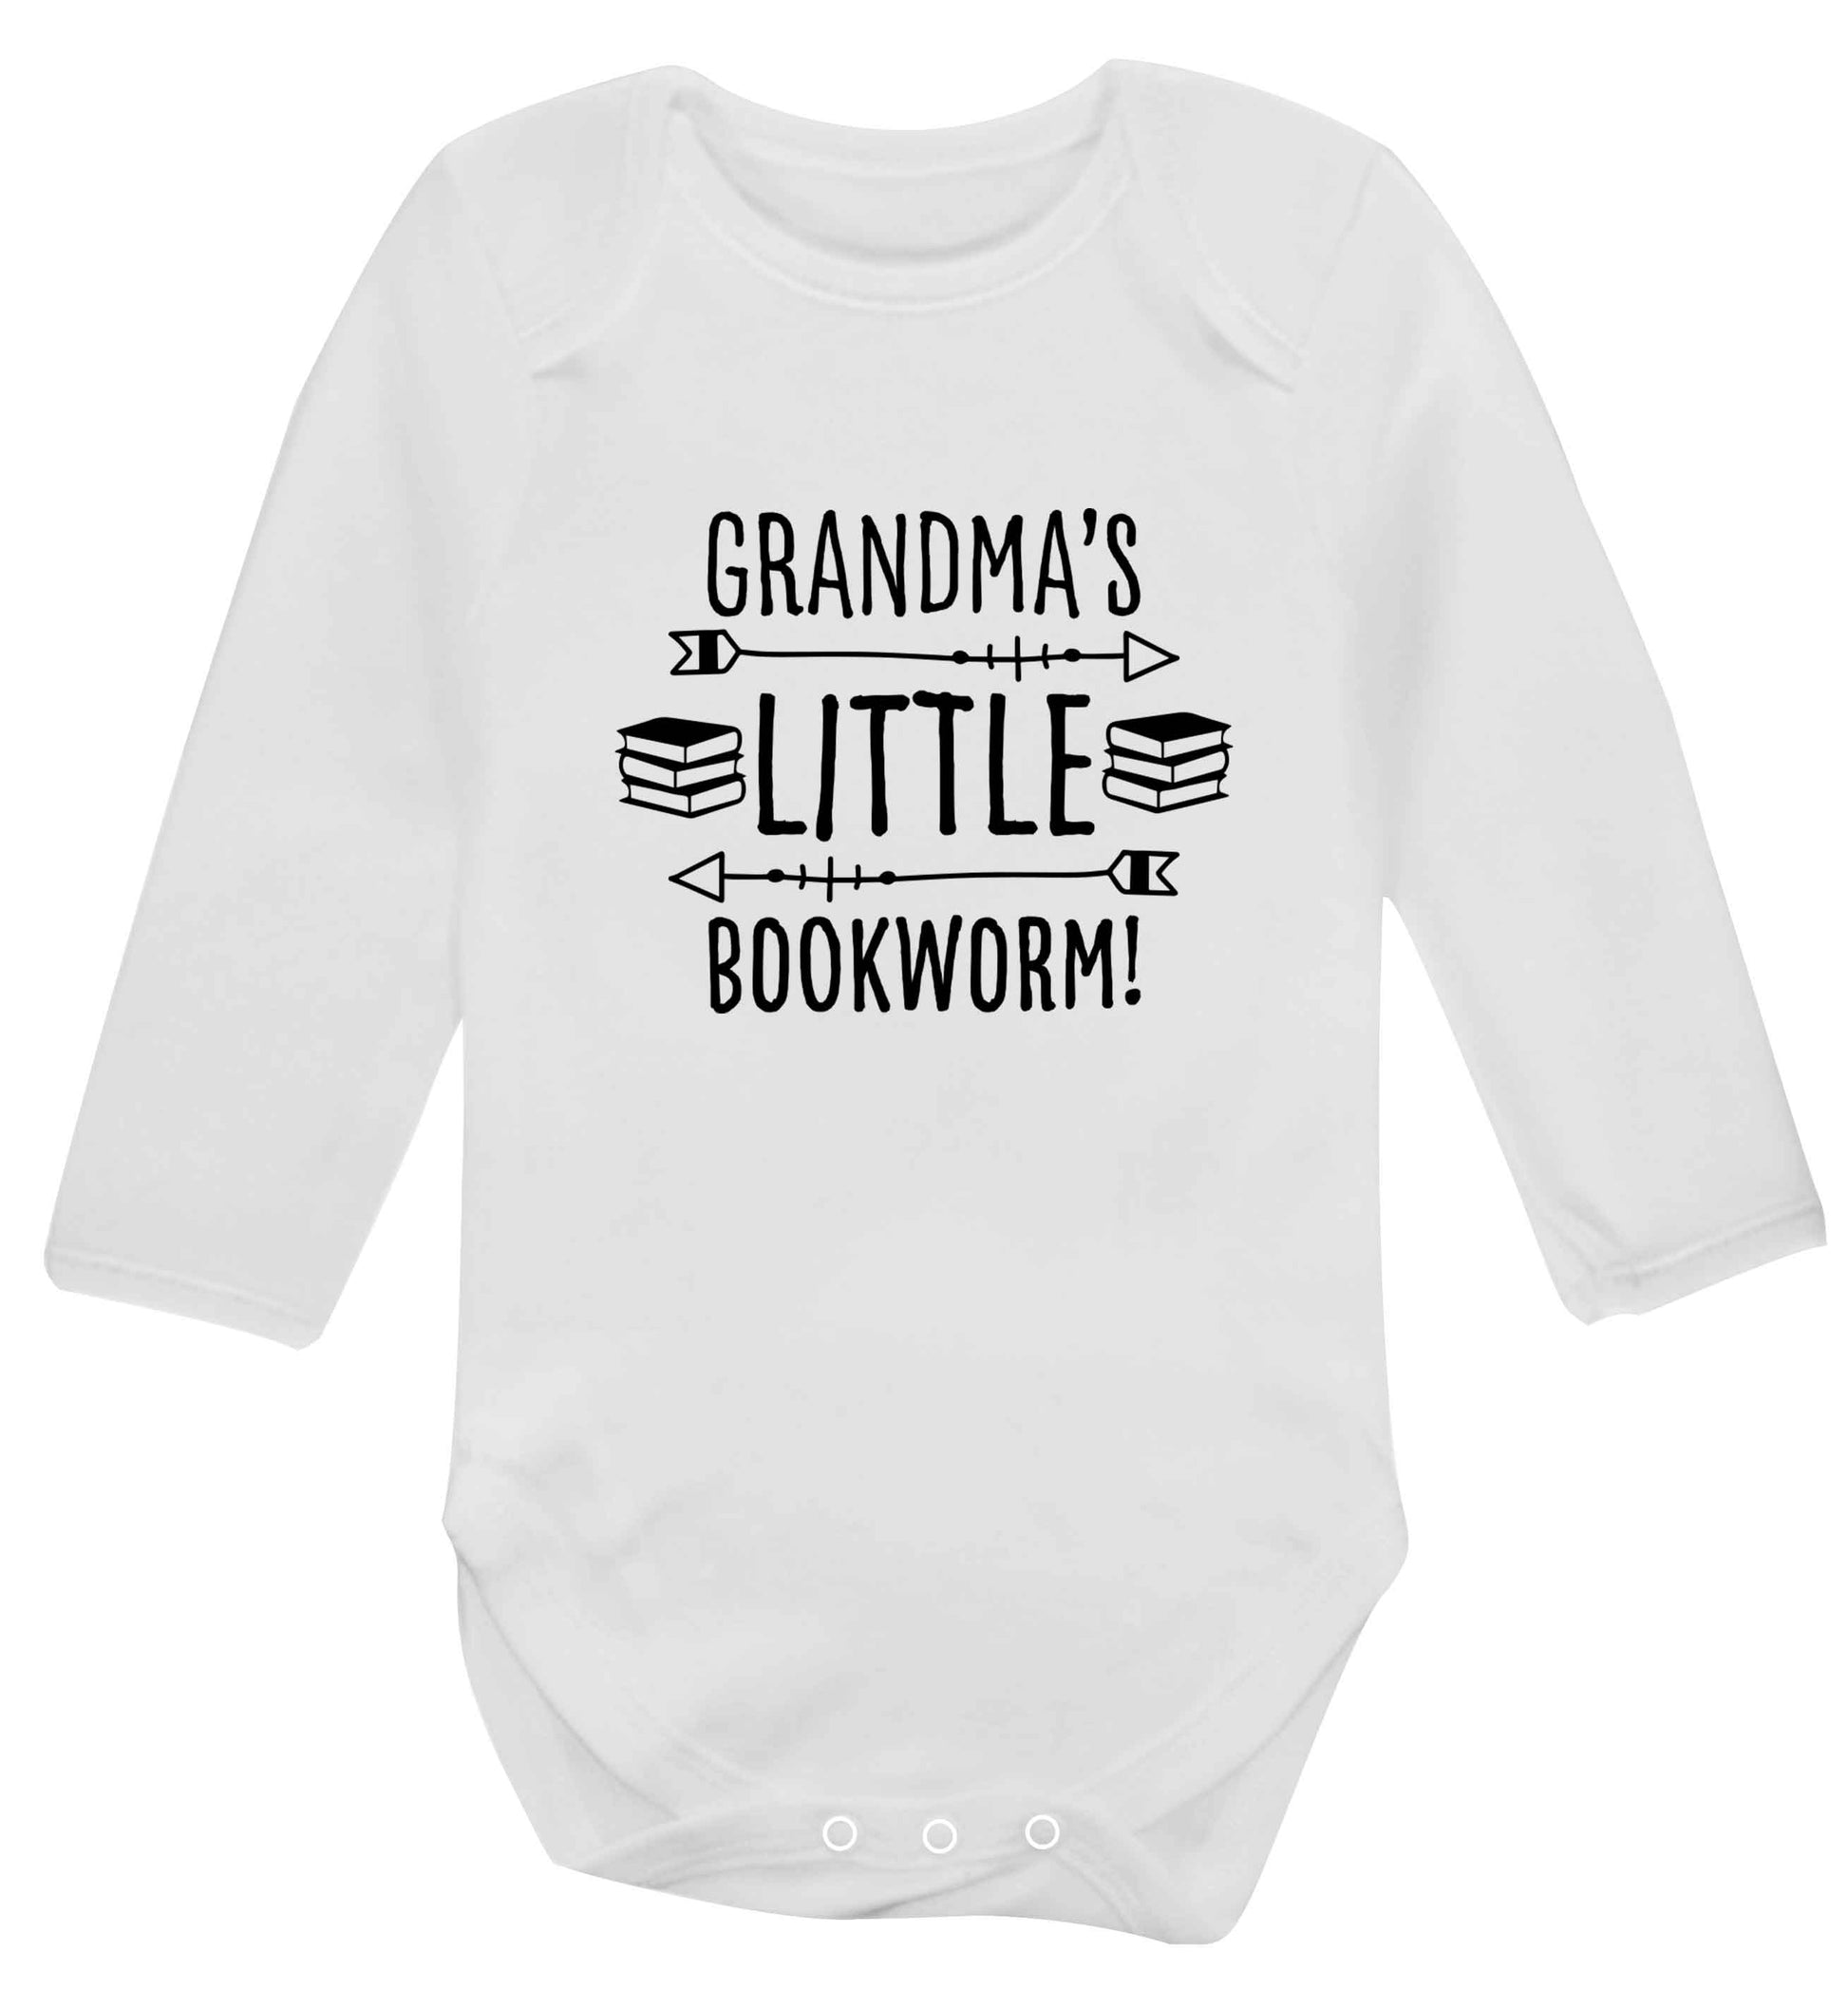 Grandma's little bookworm baby vest long sleeved white 6-12 months